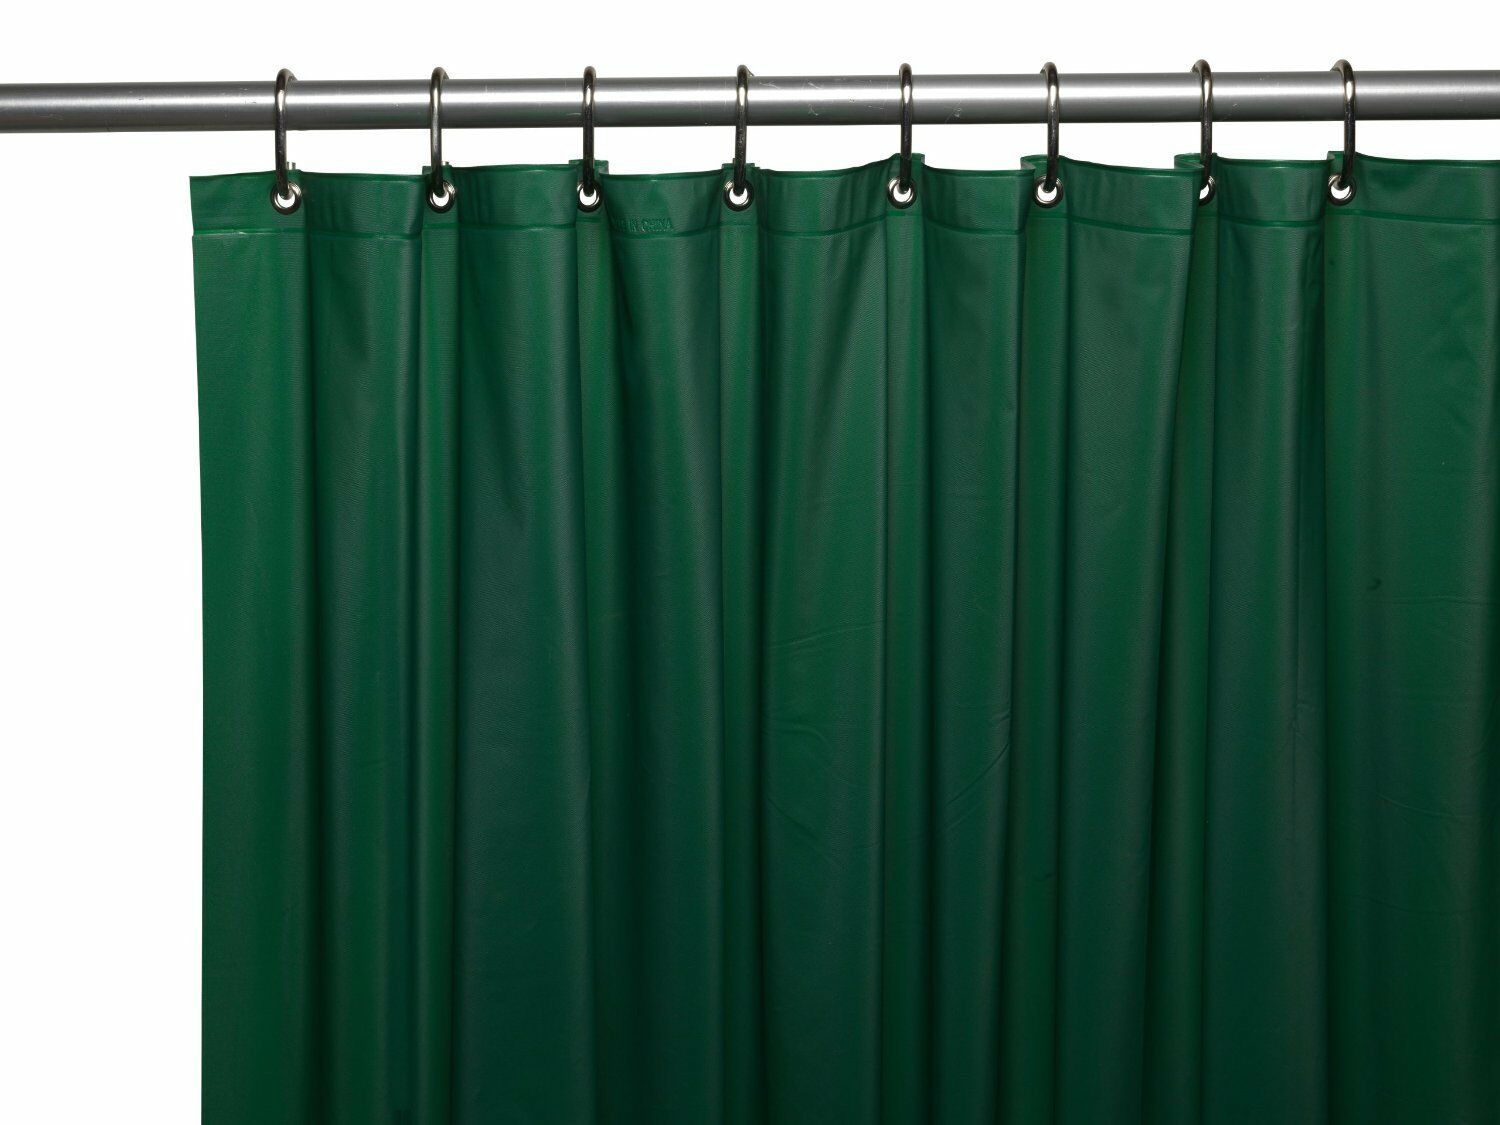 Shower Curtains - Vinyl Shower Curtain Liner - 21 Colors & Patterns - Hunter Green